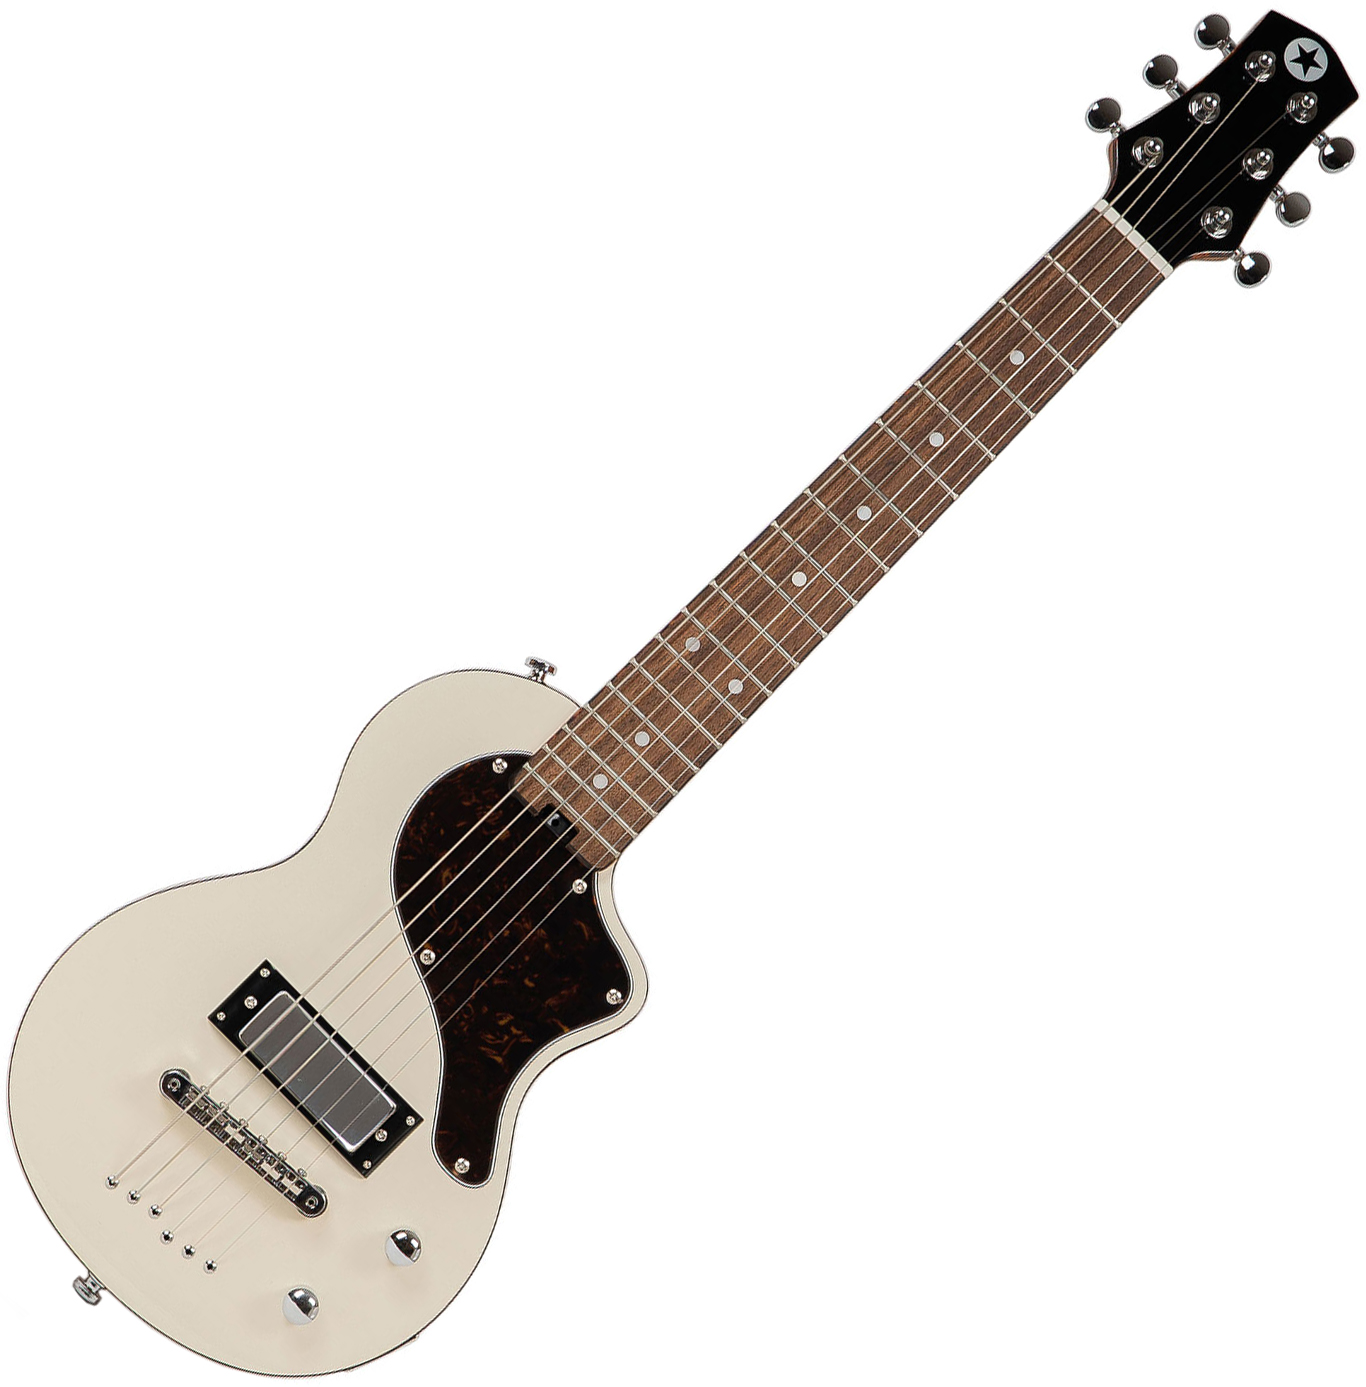 Blackstar Carry-on Travel Guitar Standard Pack +amplug2 Fly +housse - White - E-Gitarre Set - Variation 1